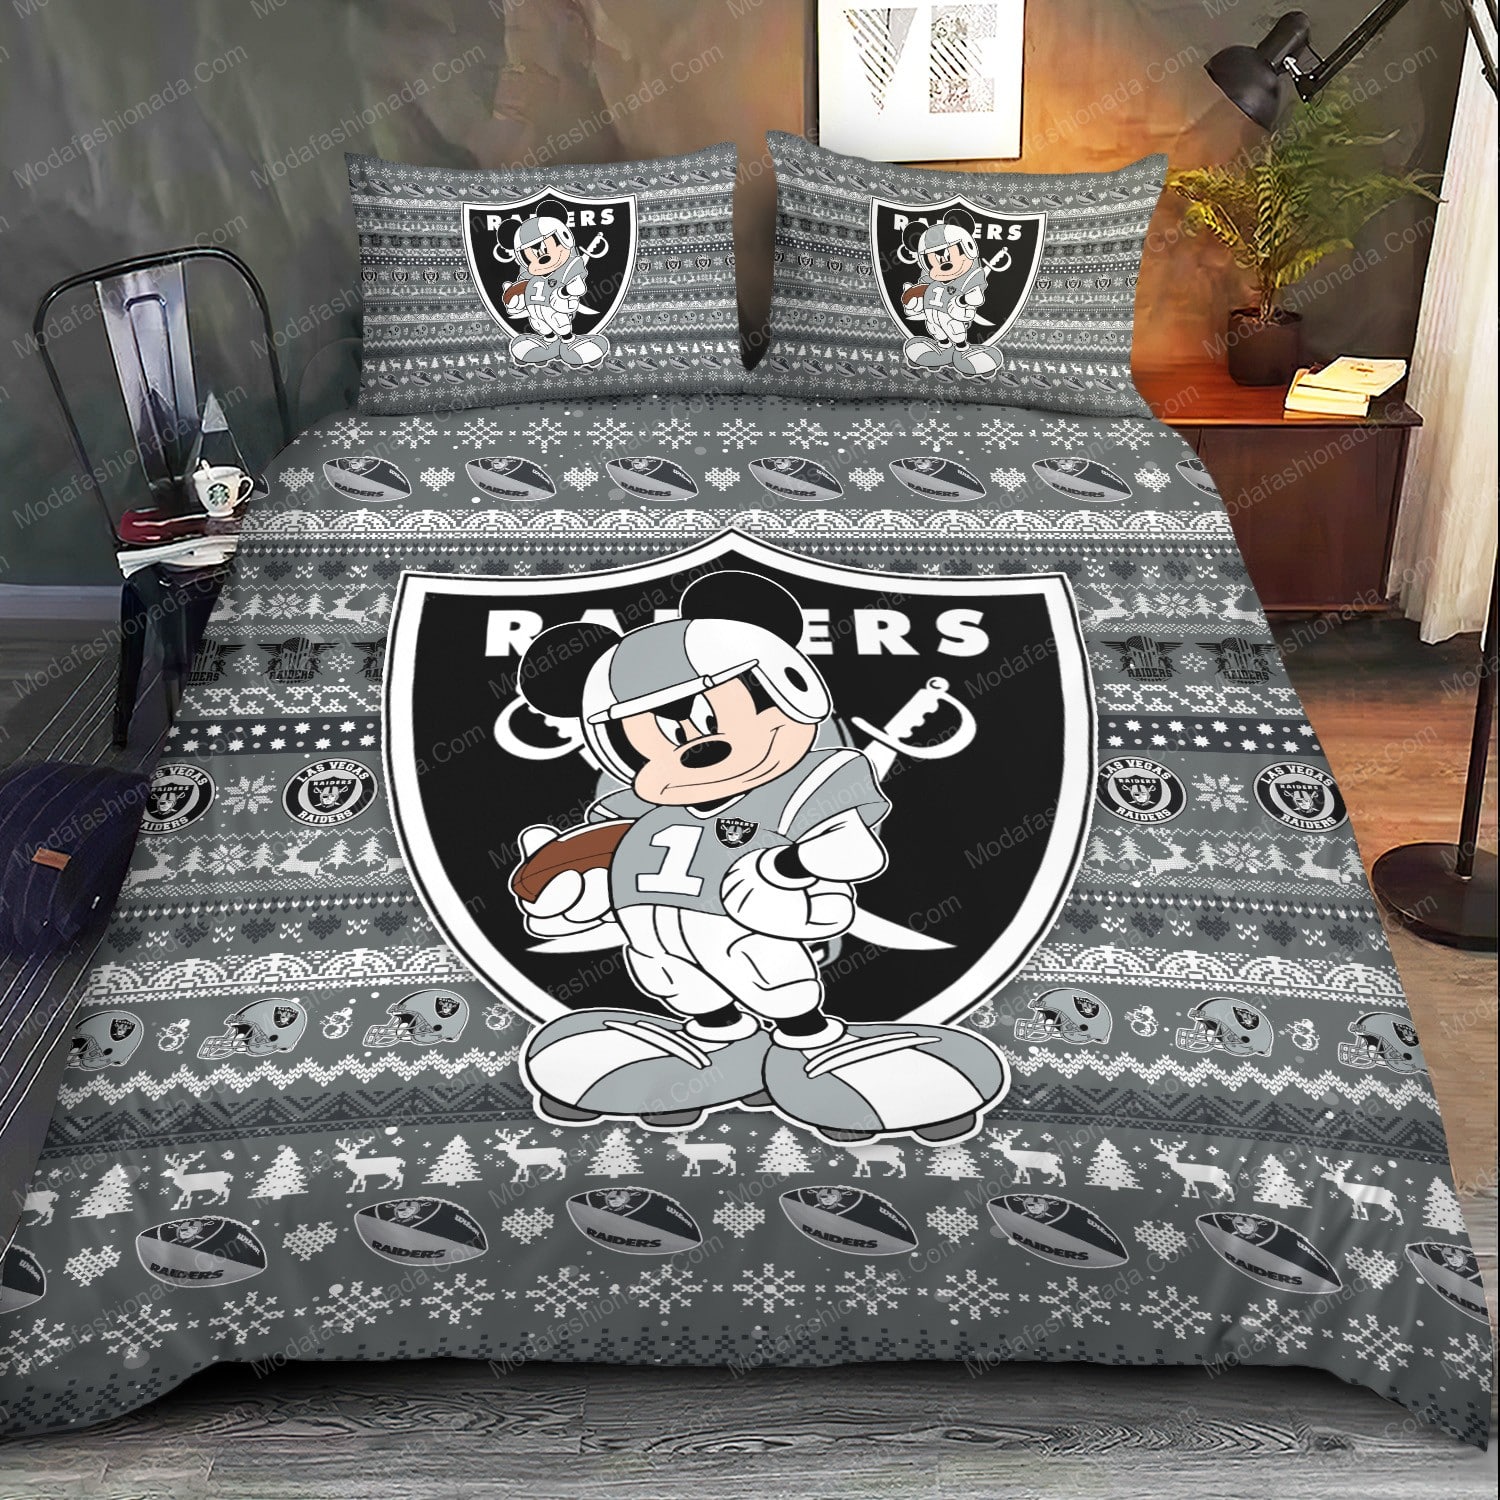 Baltimore Ravens Bedding Comfortable Mickey Louis Vuitton Gifts